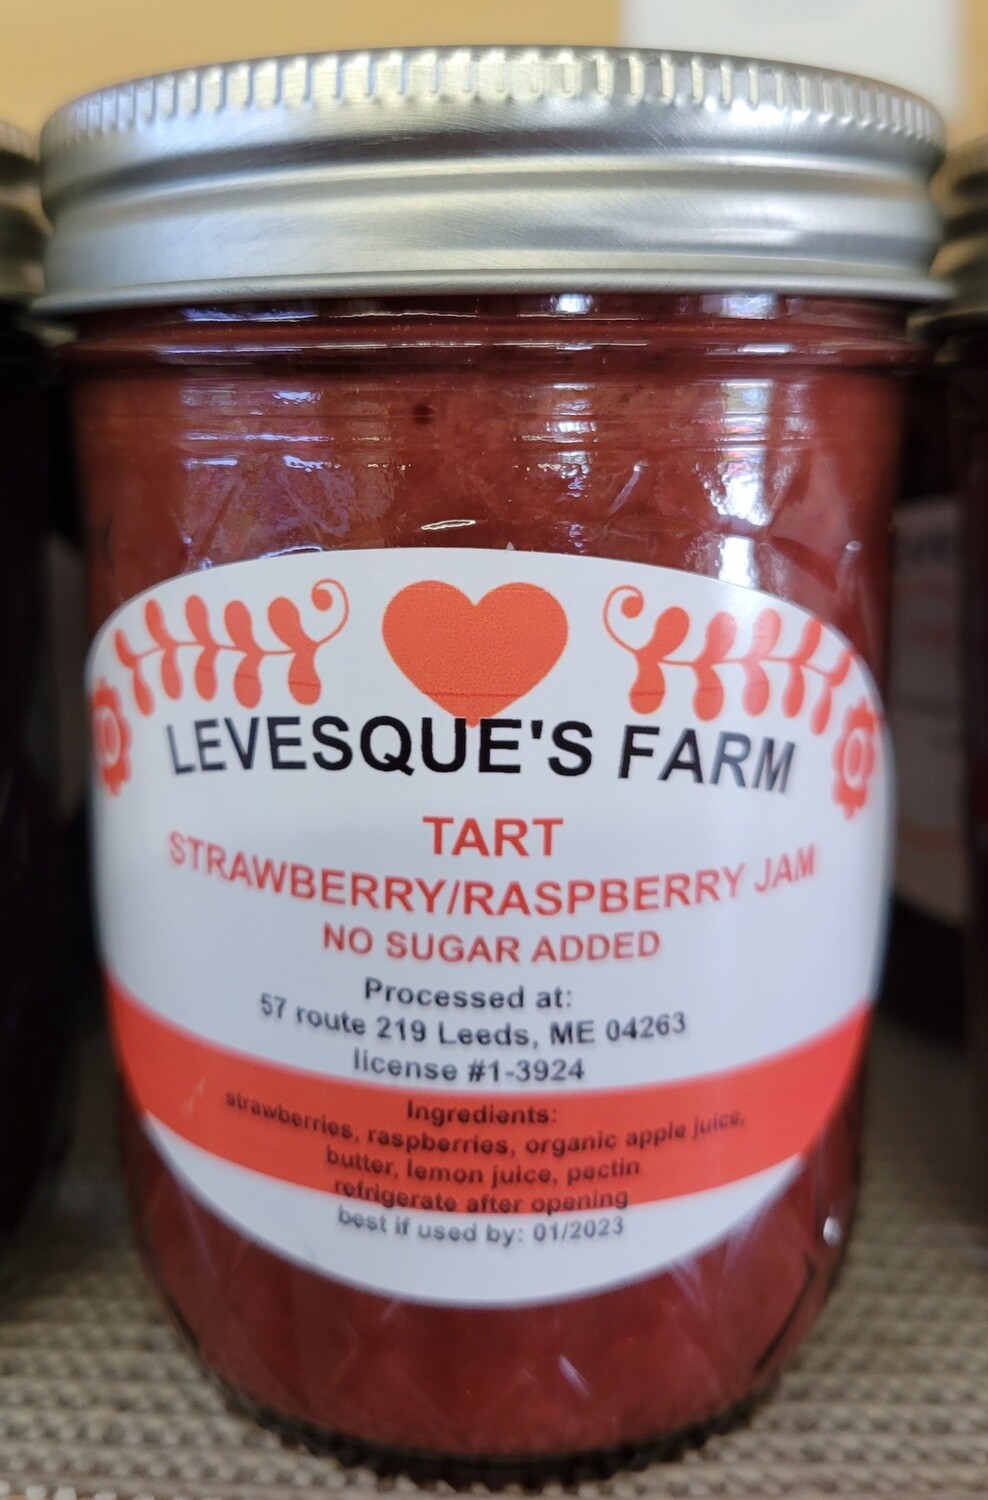 Levesque's Farm - Tart Strawberry/Raspberry Jam